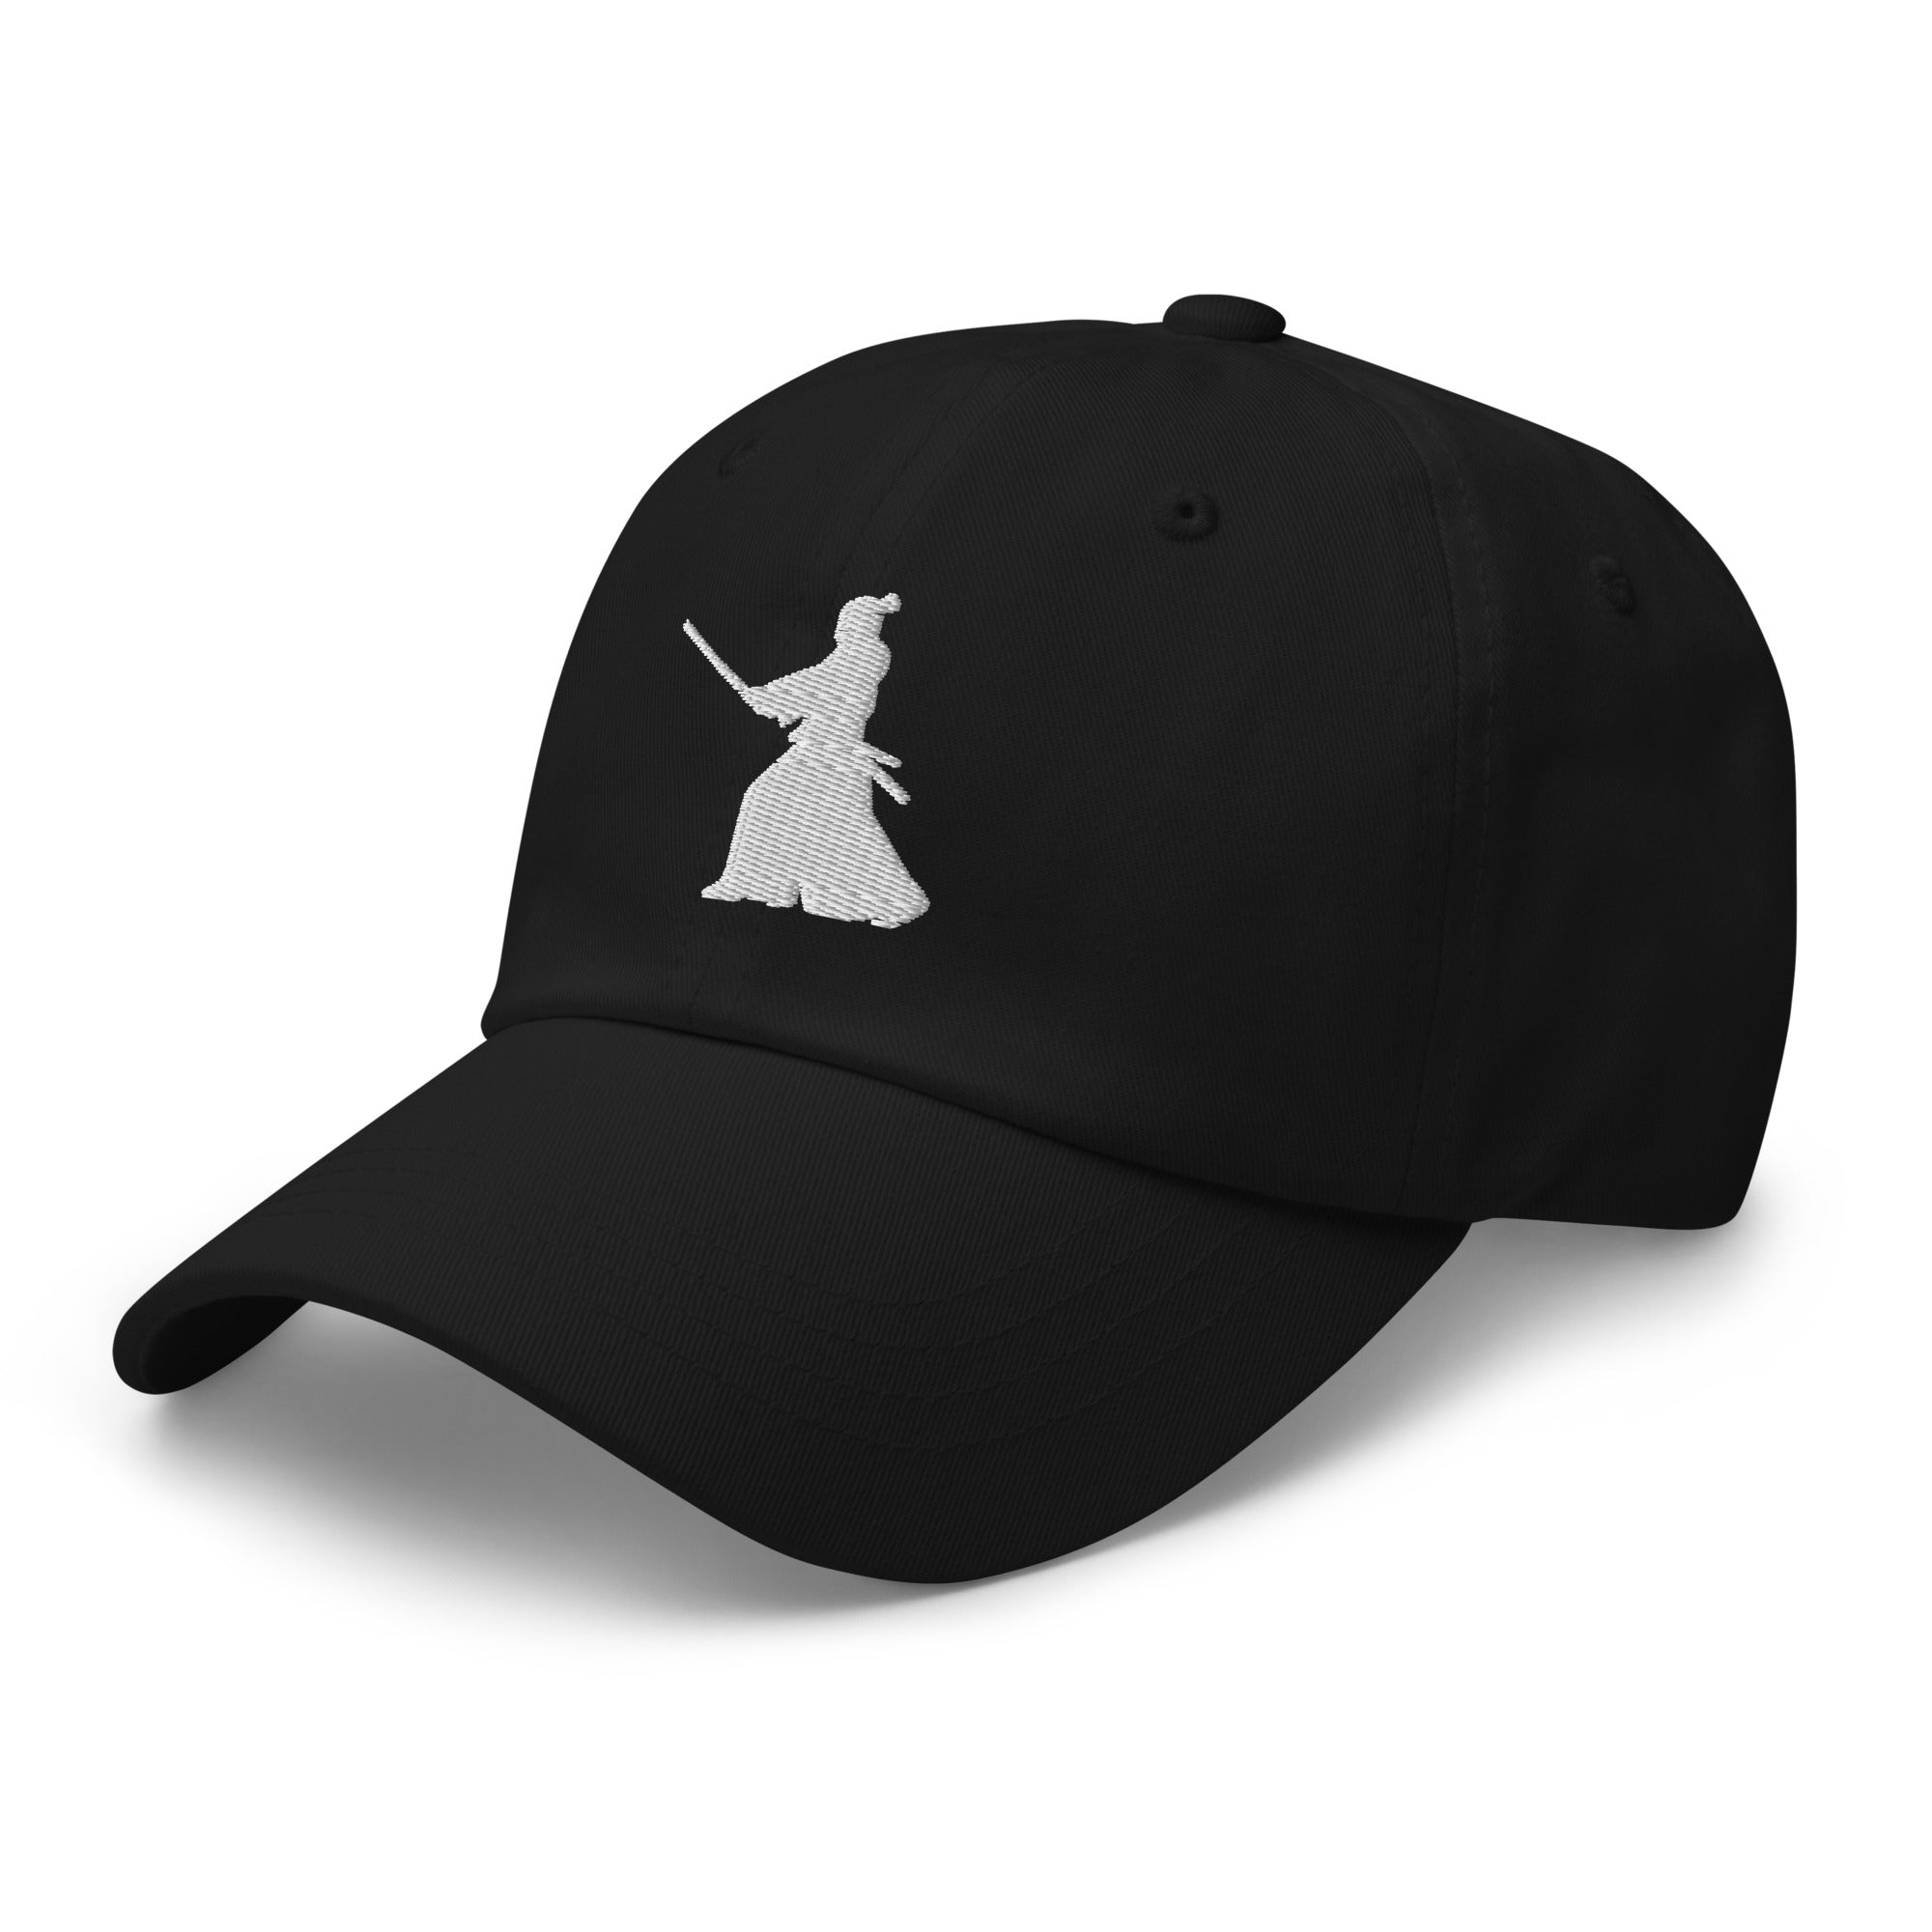 Ronin Samurai Warrior Swordsman Embroidered Baseball Cap Seigan No Kamae Stance Dad hat - Edge of Life Designs